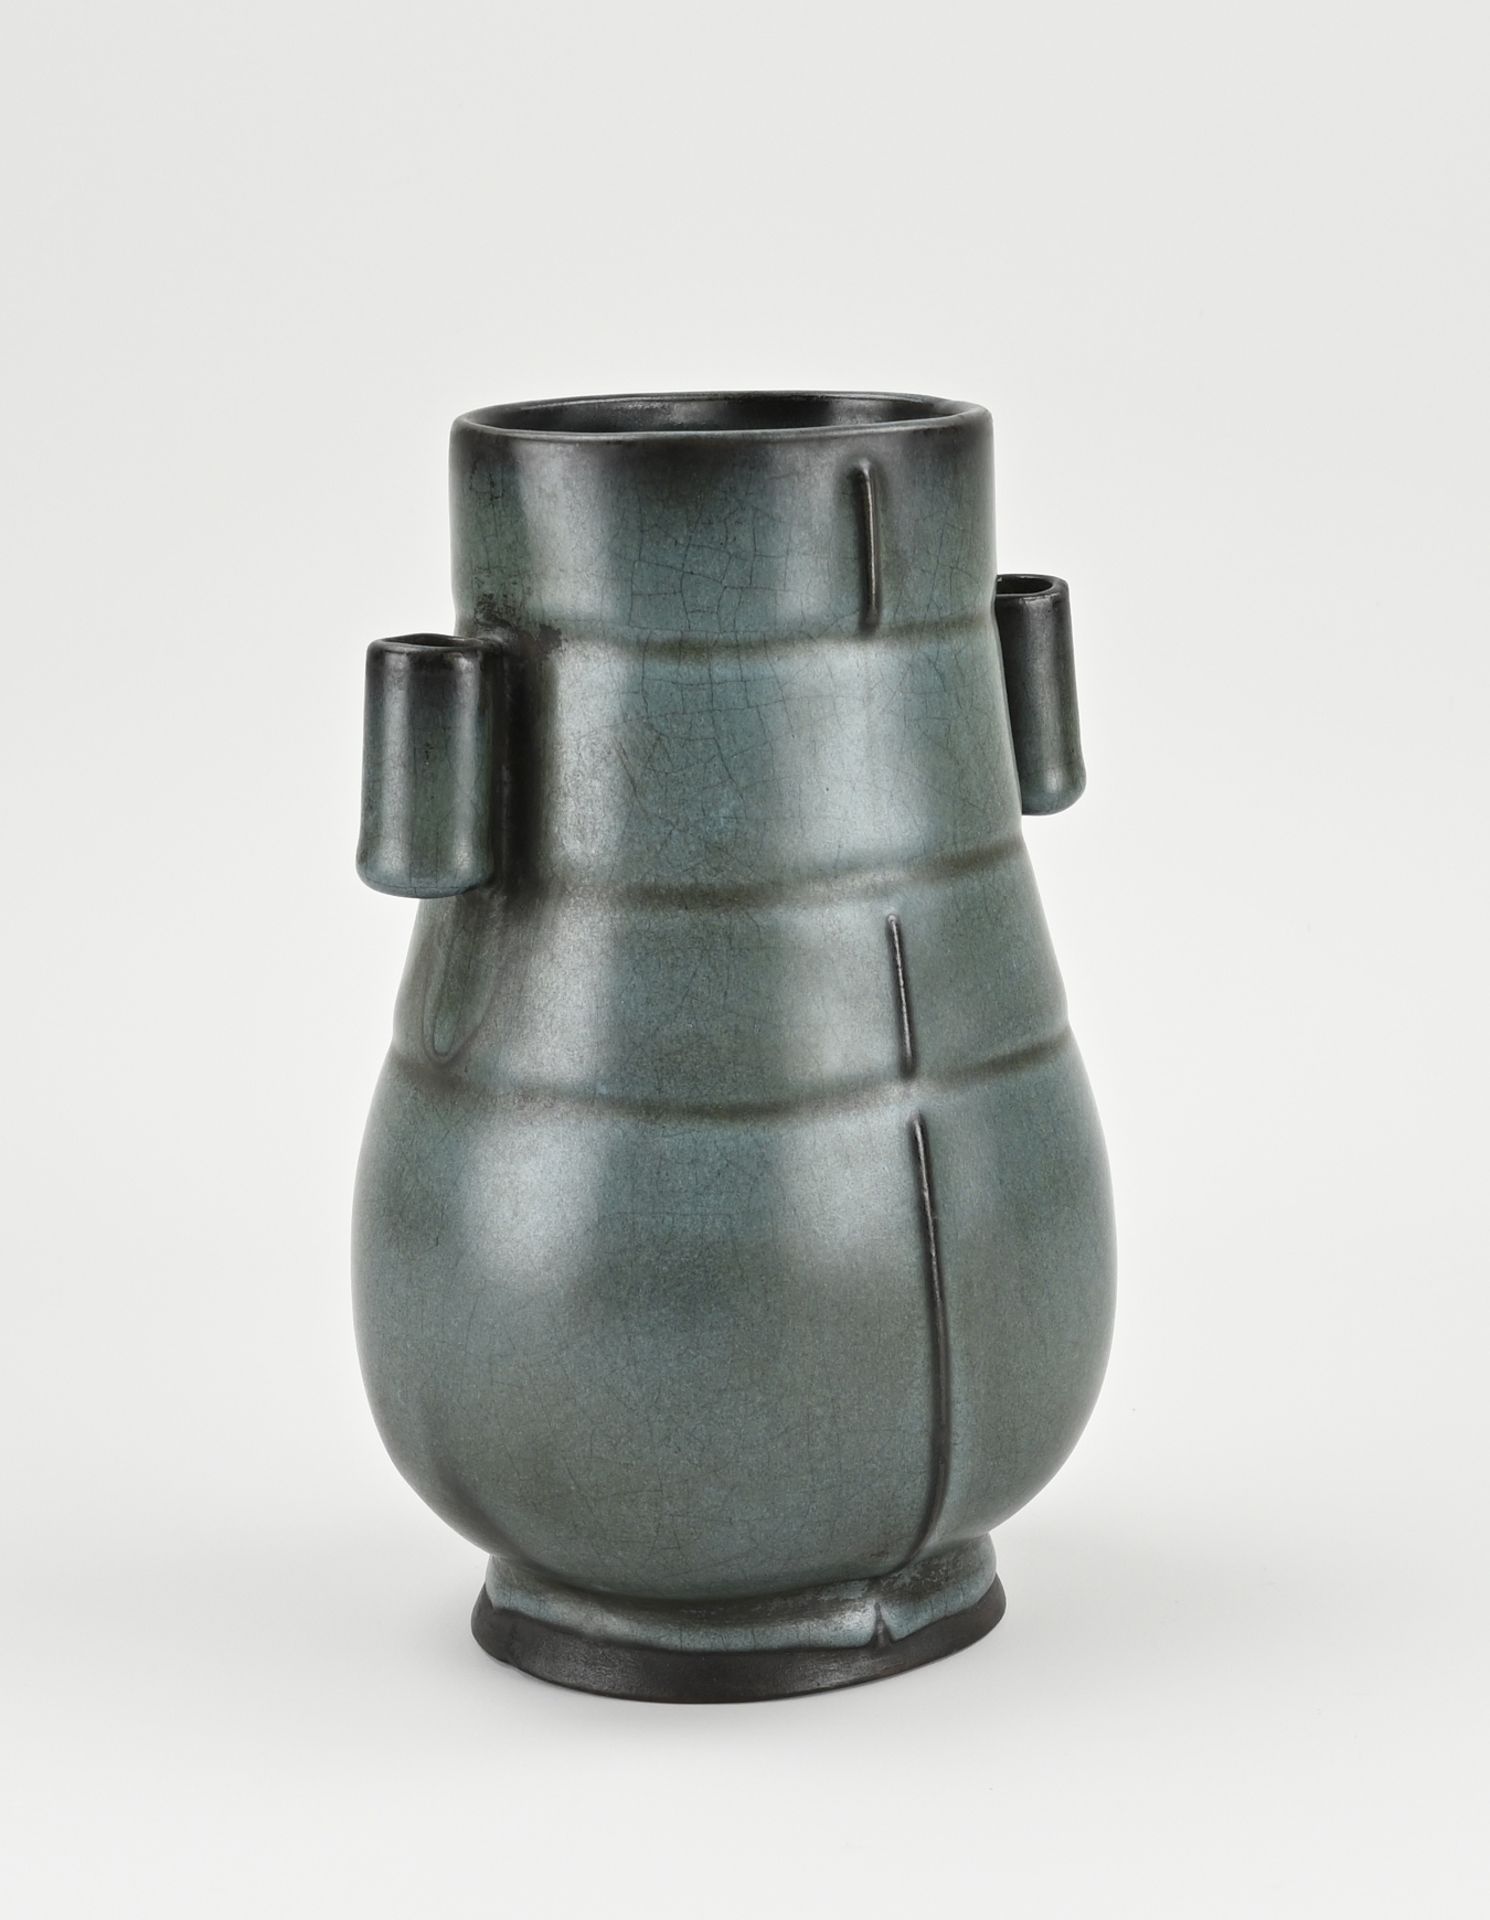 Chinese vase, H 23 cm. - Image 2 of 3